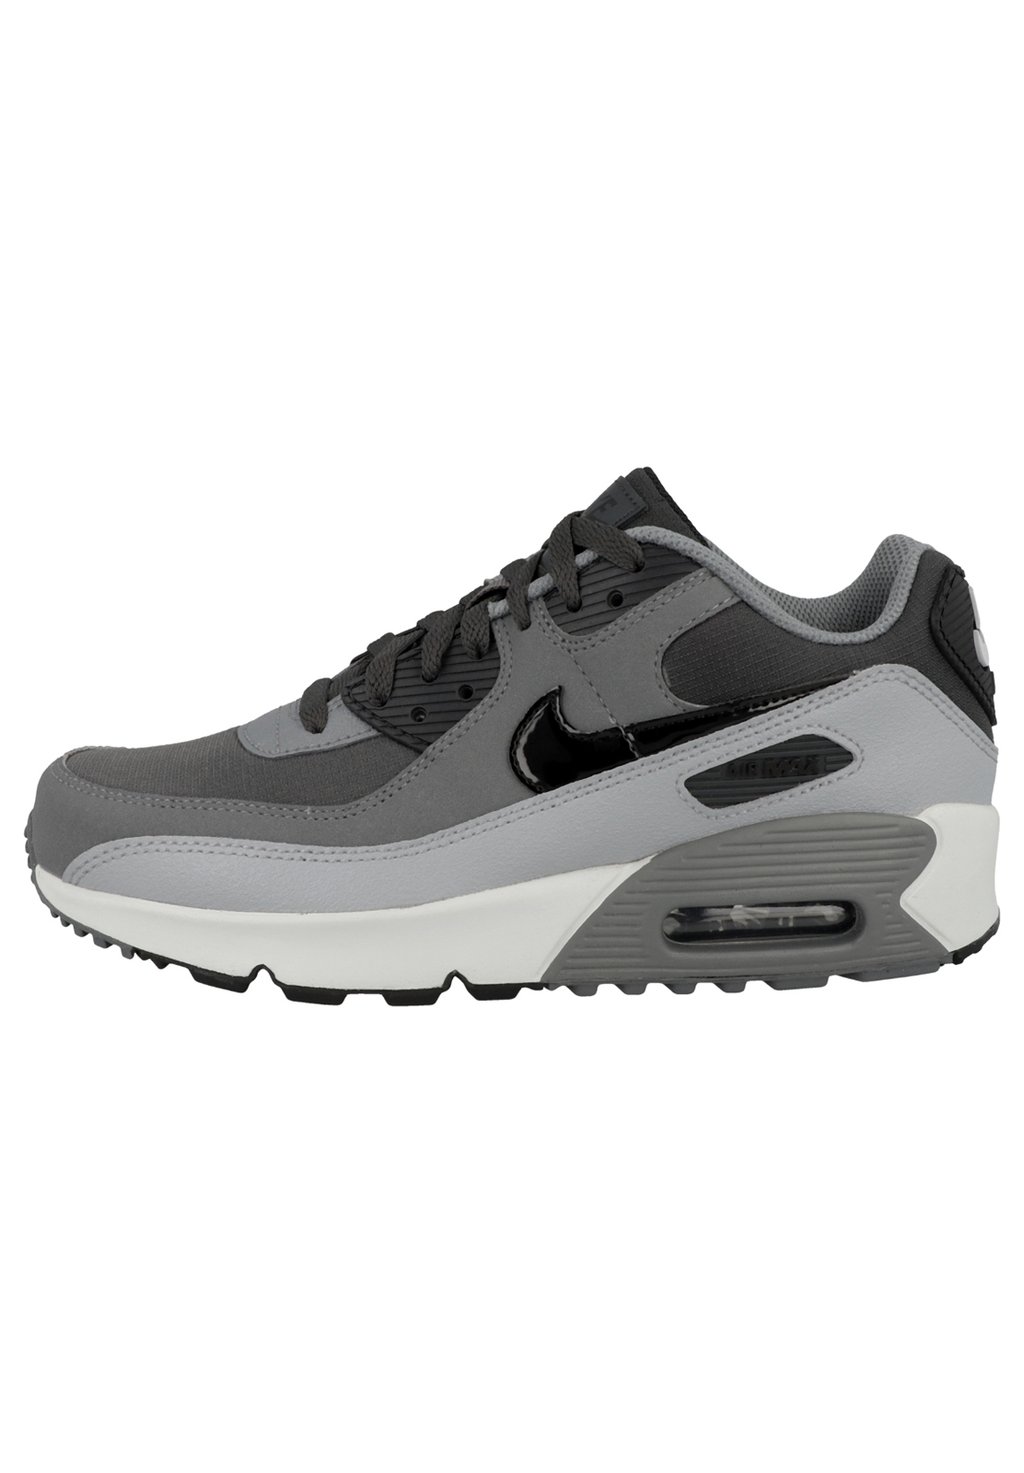 Низкие кроссовки Air Max 90 Ltr Gs Nike, цвет anthracite/black/dark grey/cool grey